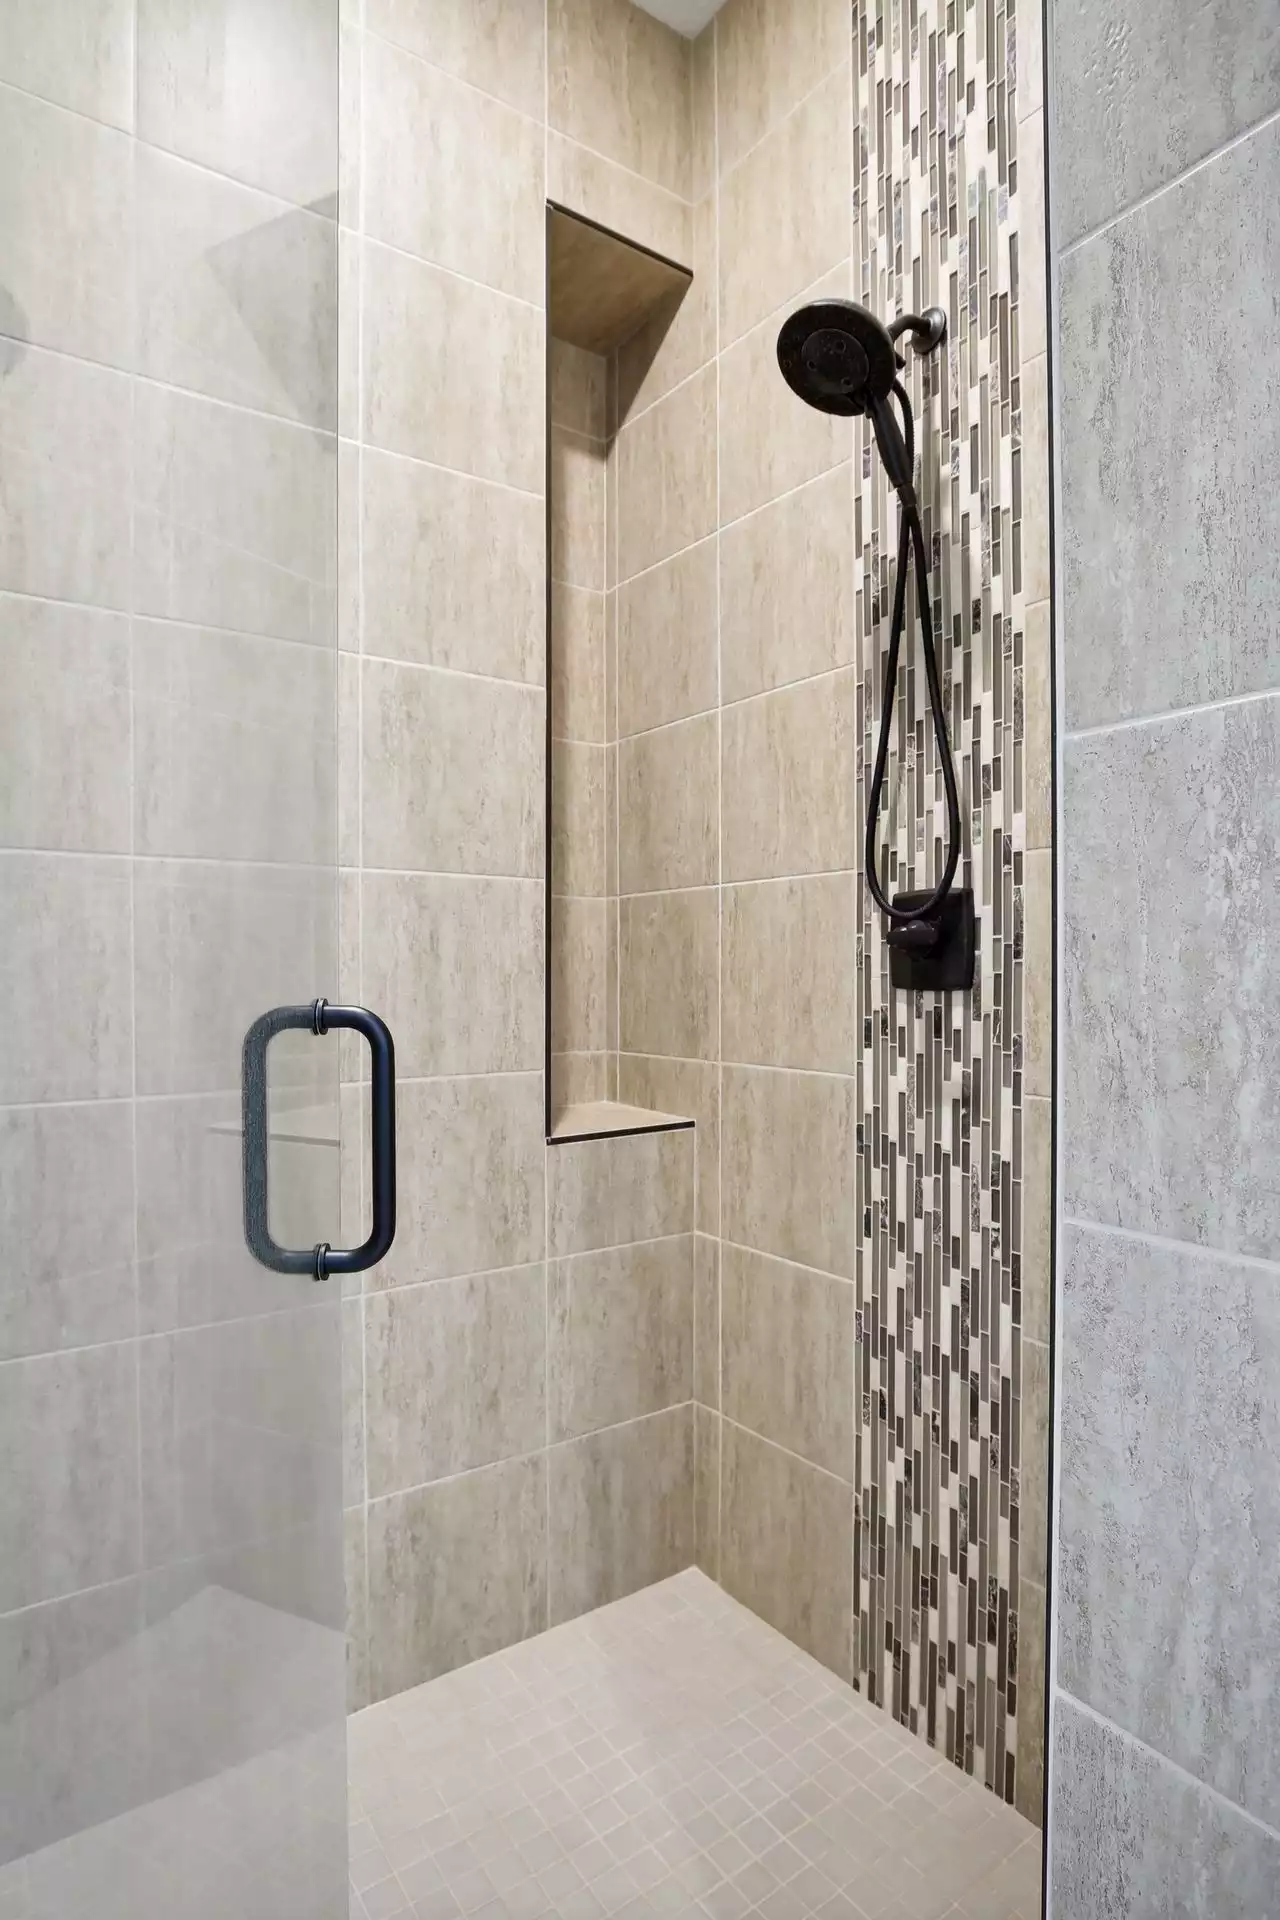 Decorative tile shower